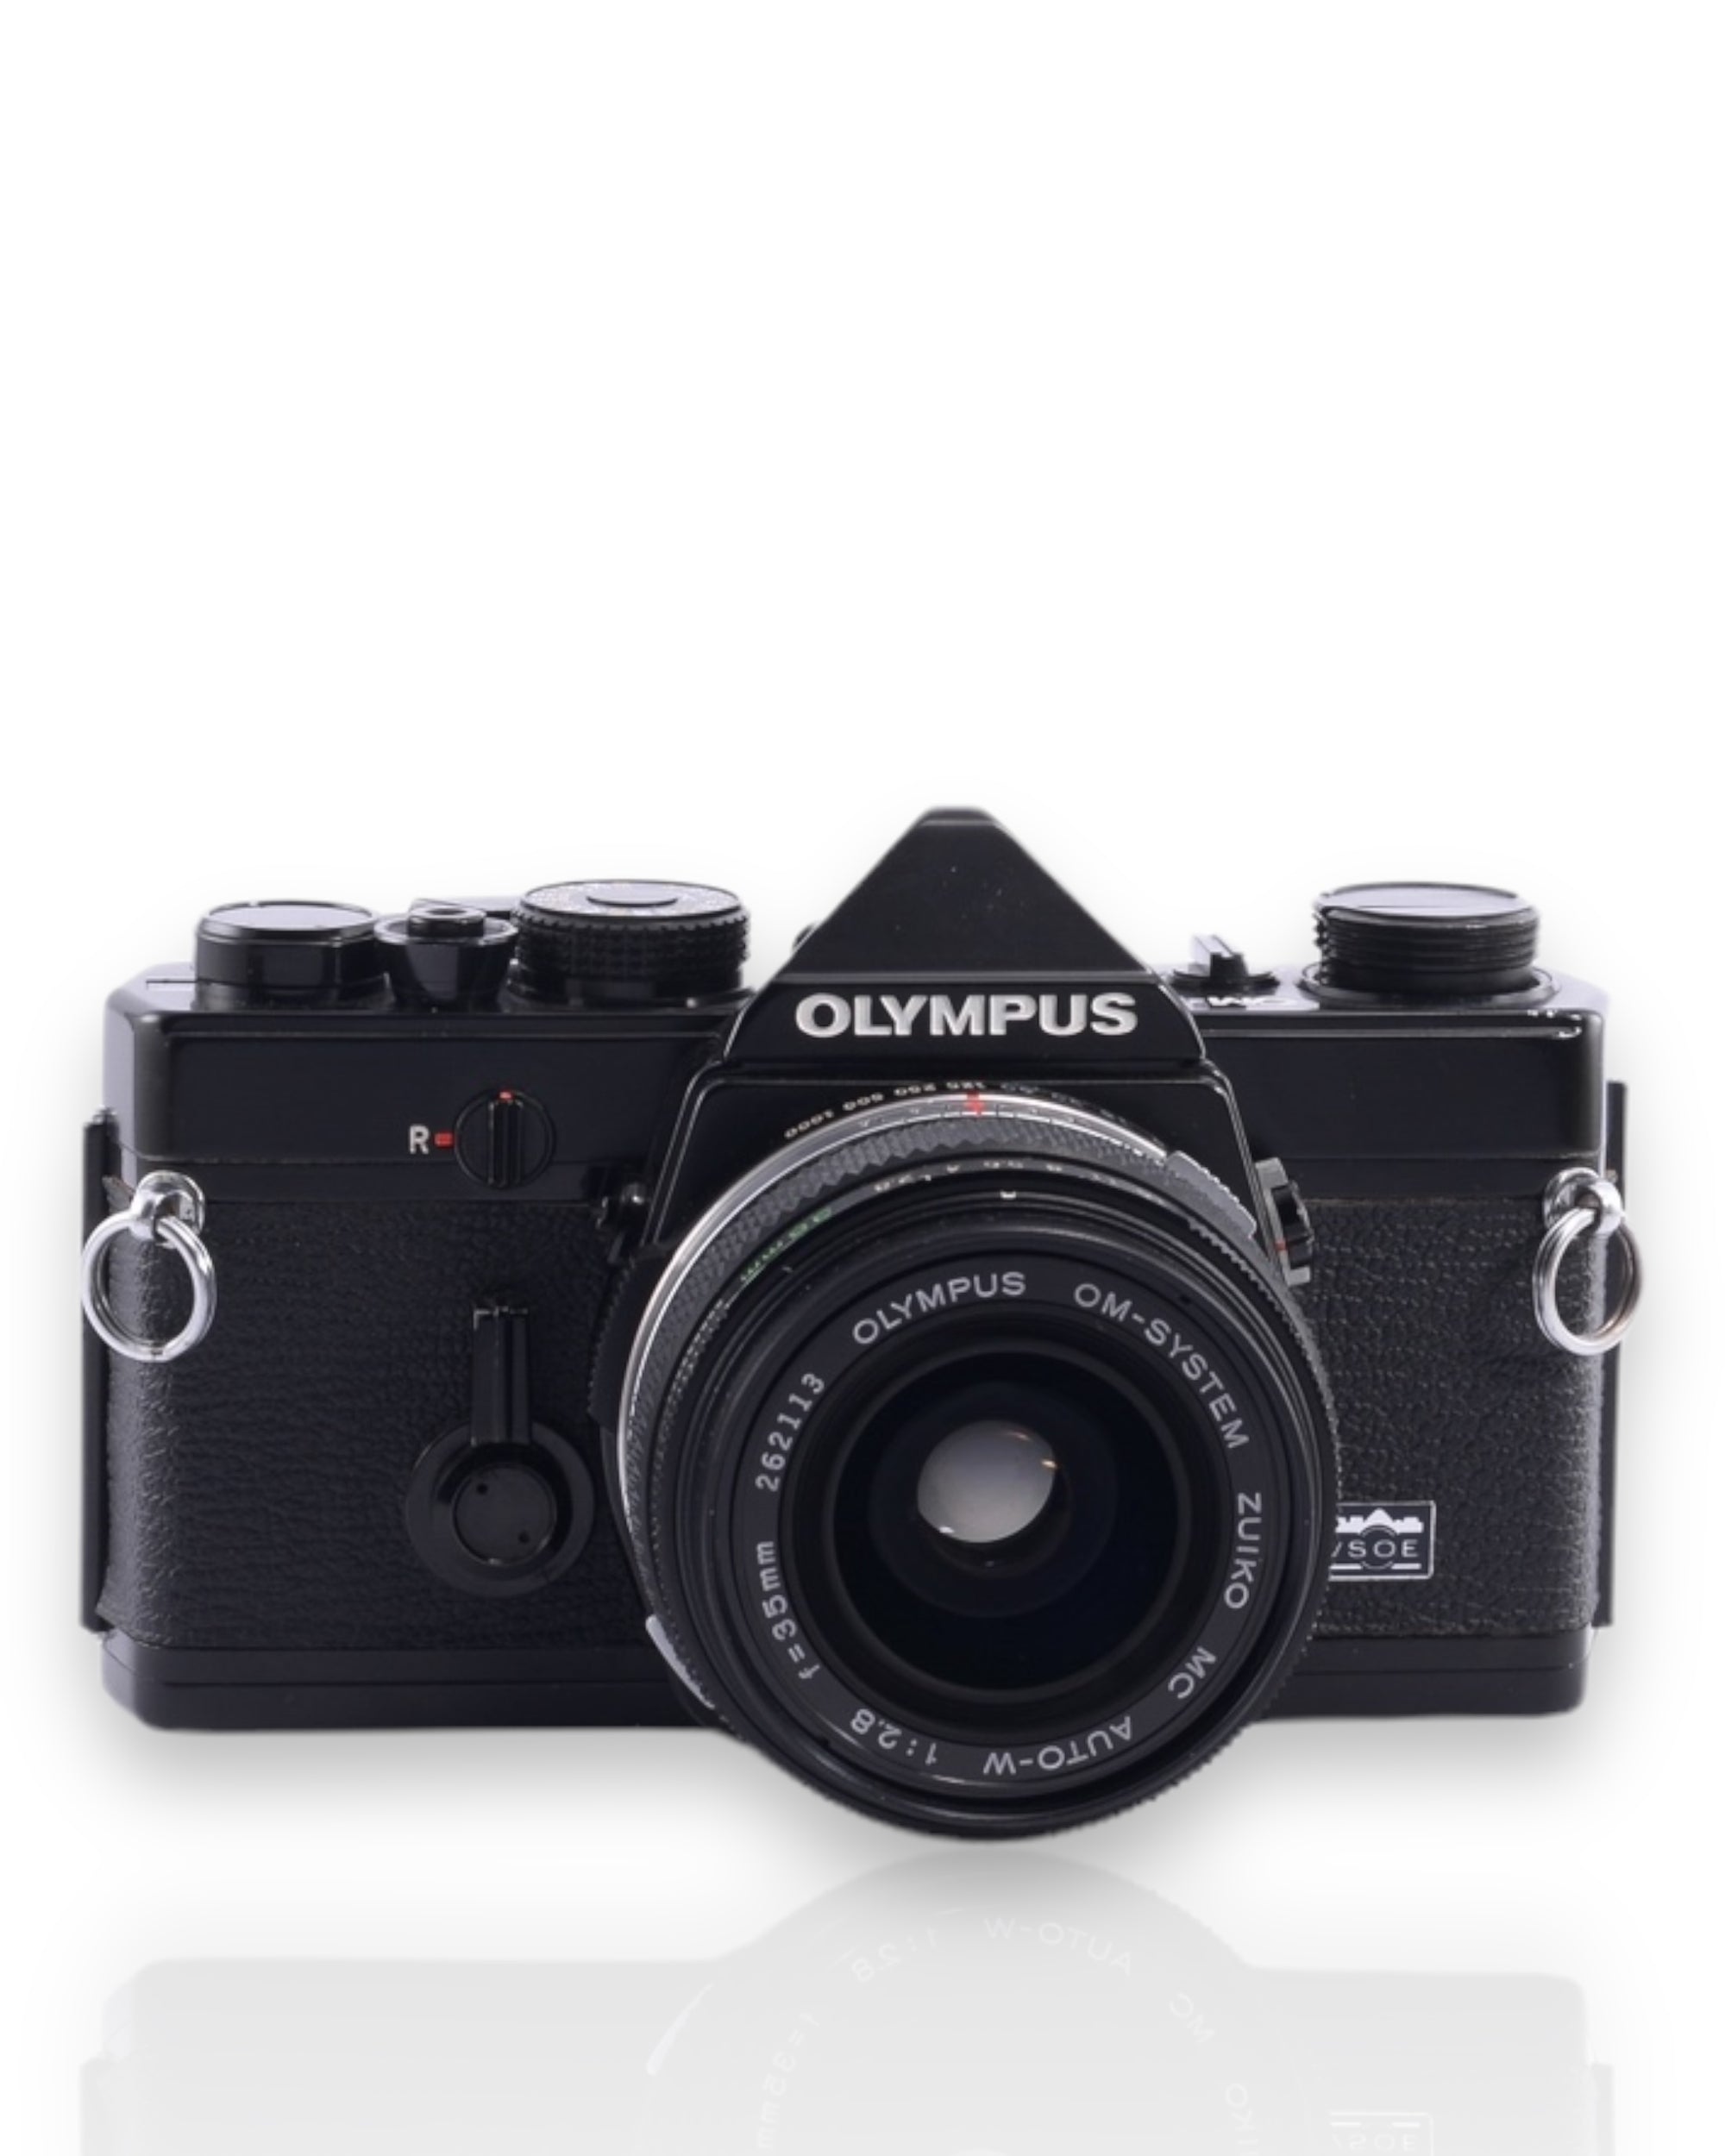 OM-1 35mm SLR Film Camera with 35mm f2.8 lens